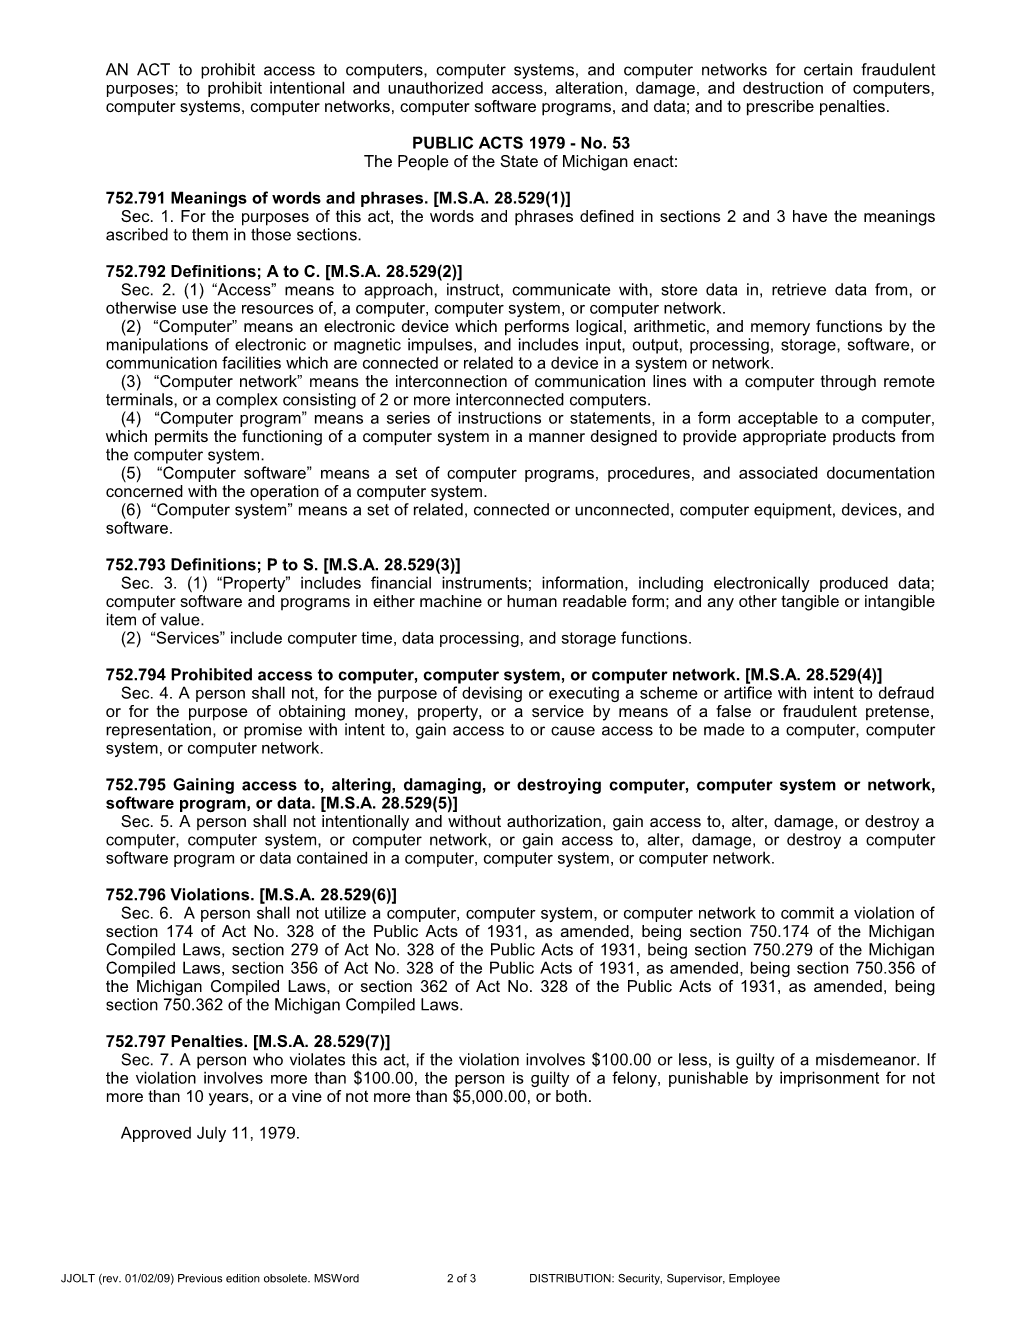 SWSS Profile/Security Agreement FIA-60